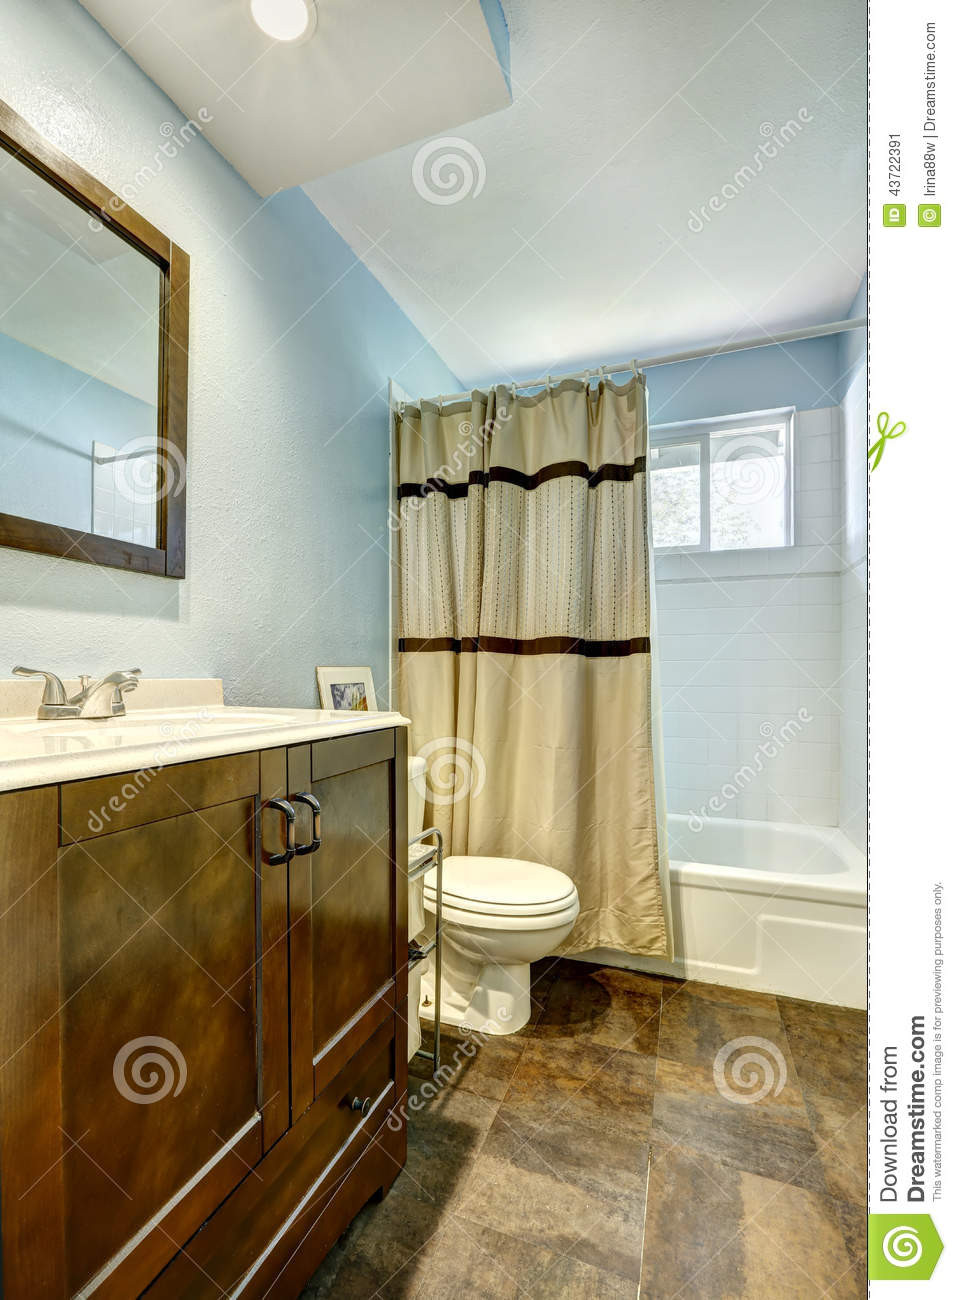 Blue Bathroom Walls
 Bathroom With Brown Tile Floor And Light Blue Walls Stock